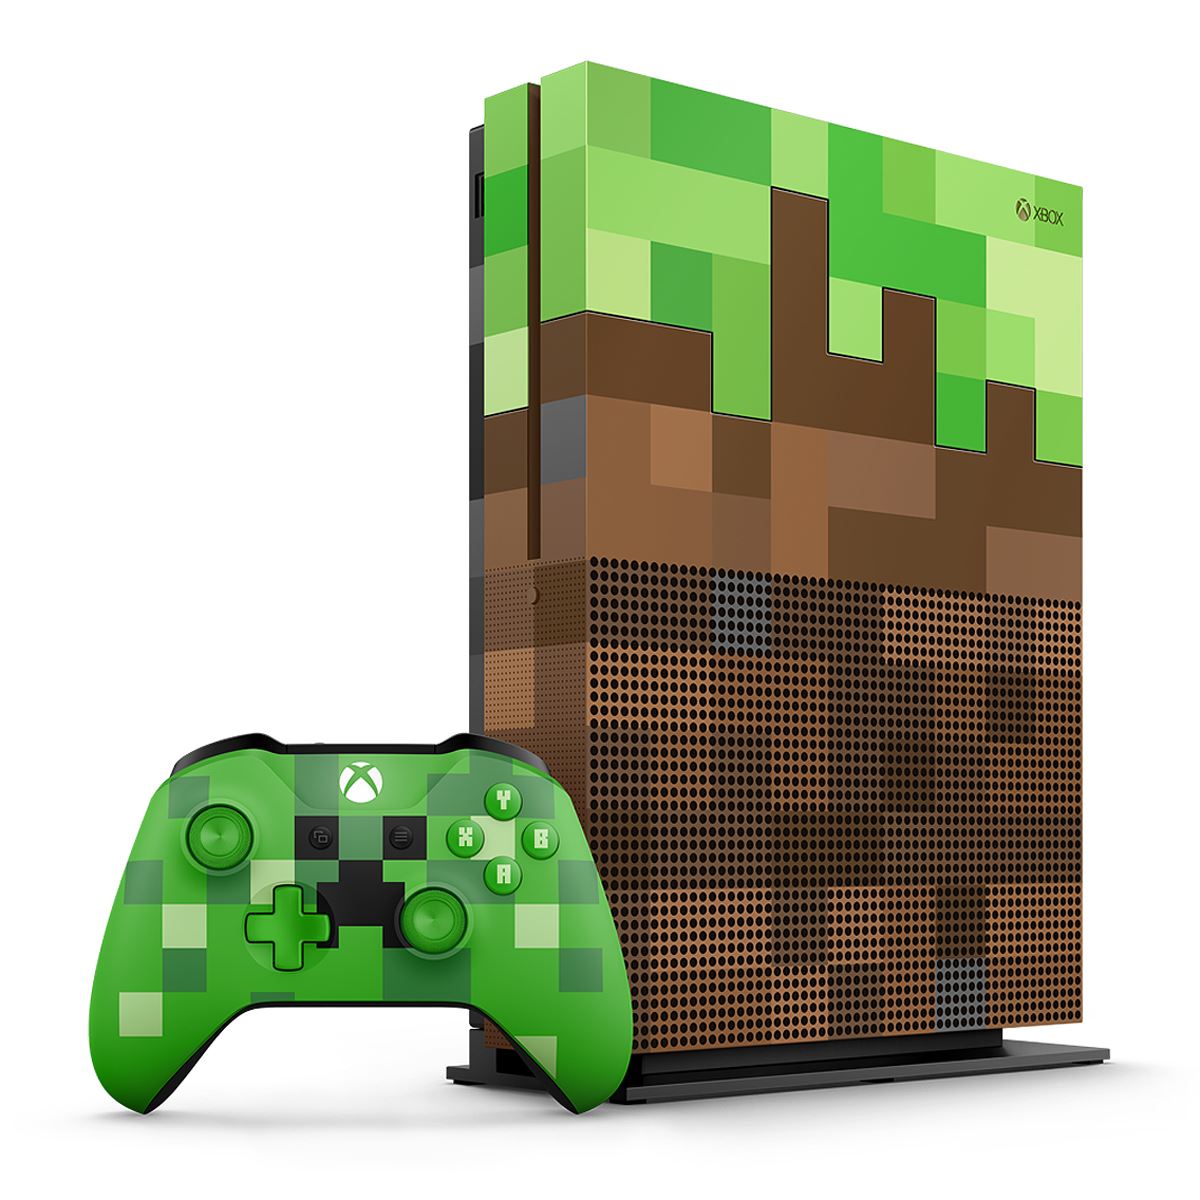 Consola Xbox One 1TB Minecraft Edition